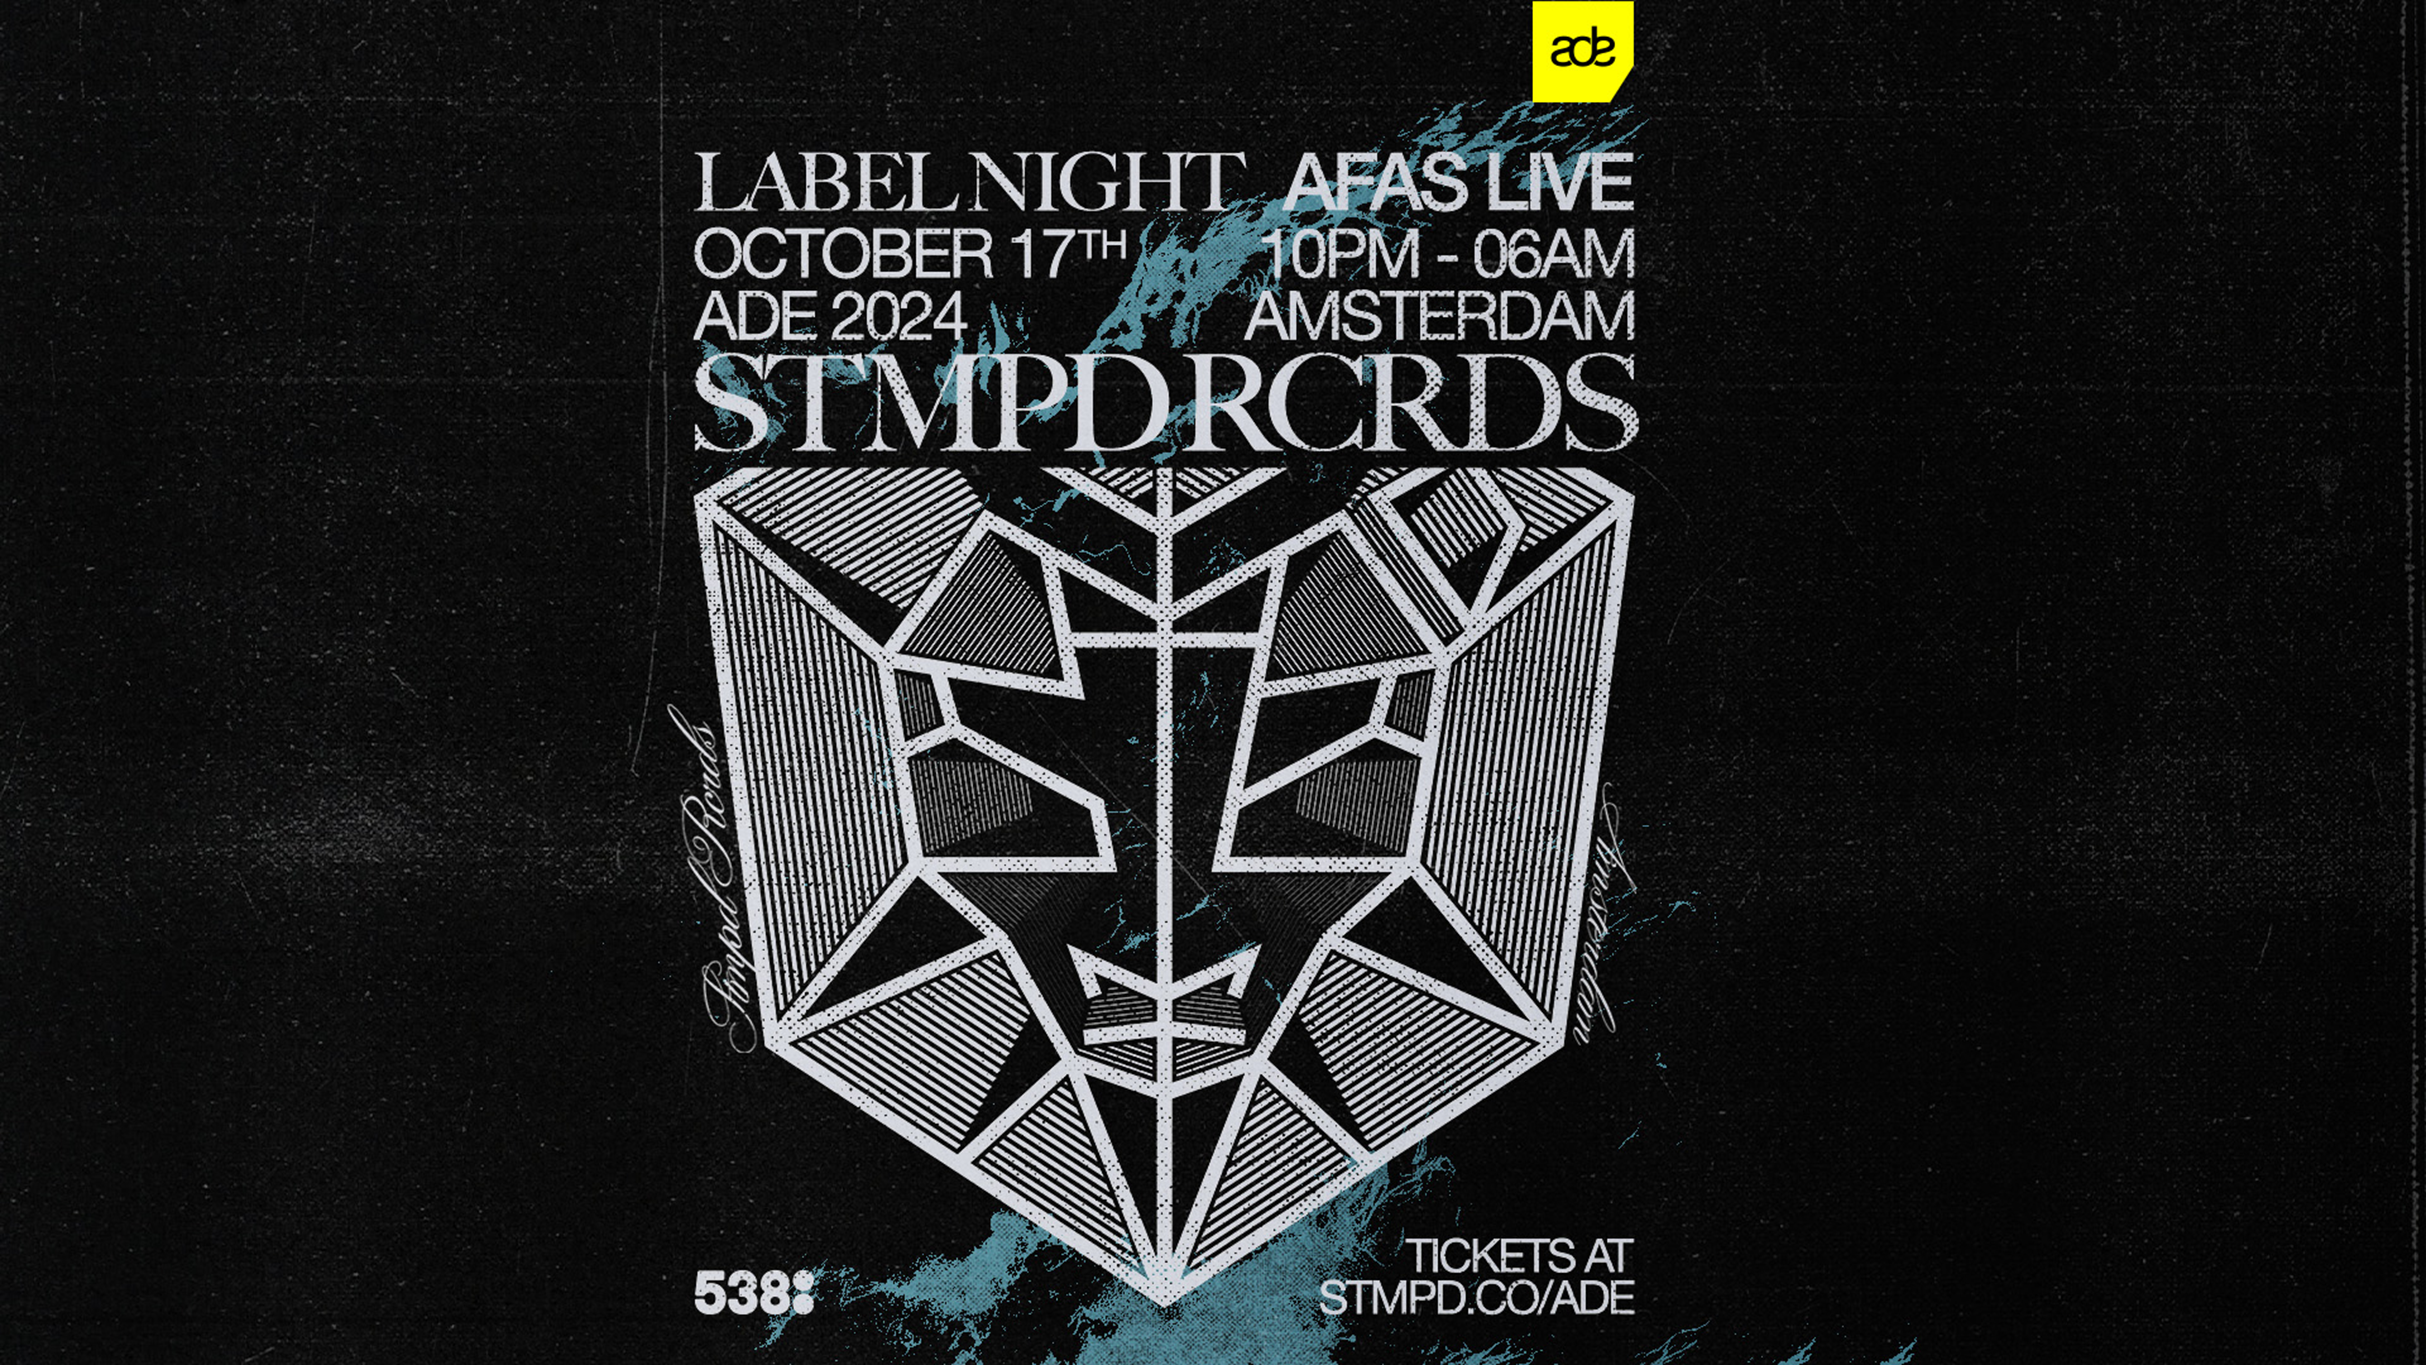 STMPD - RCRDS Label Night